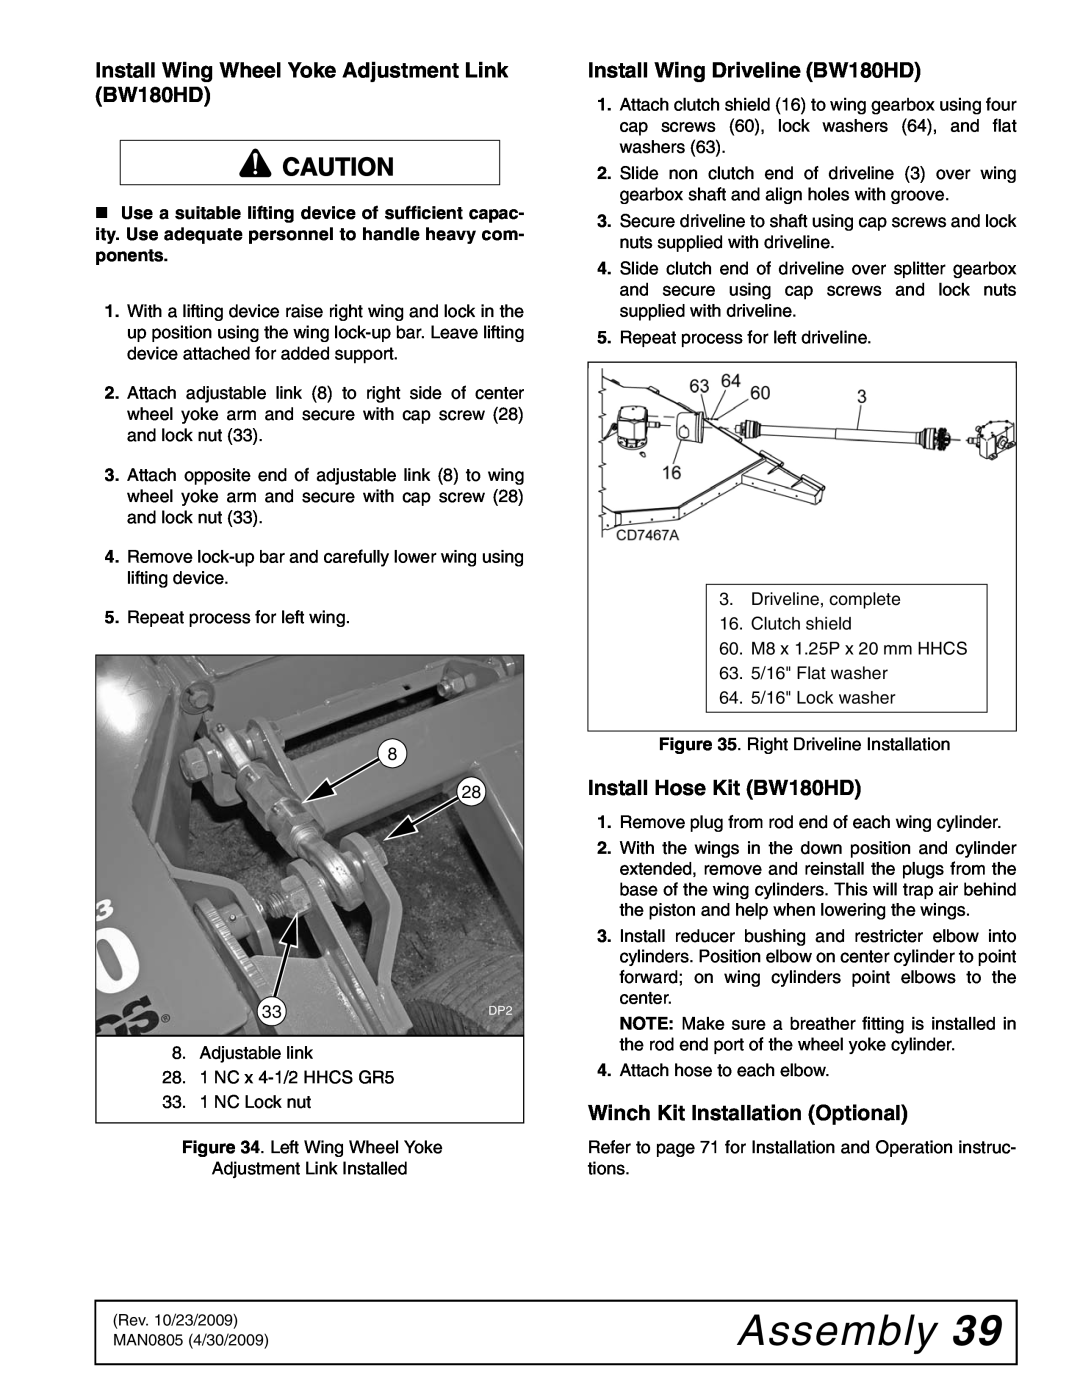 Woods Equipment BW180HB manual Assembly, Install Wing Wheel Yoke Adjustment Link BW180HD, Install Wing Driveline BW180HD 